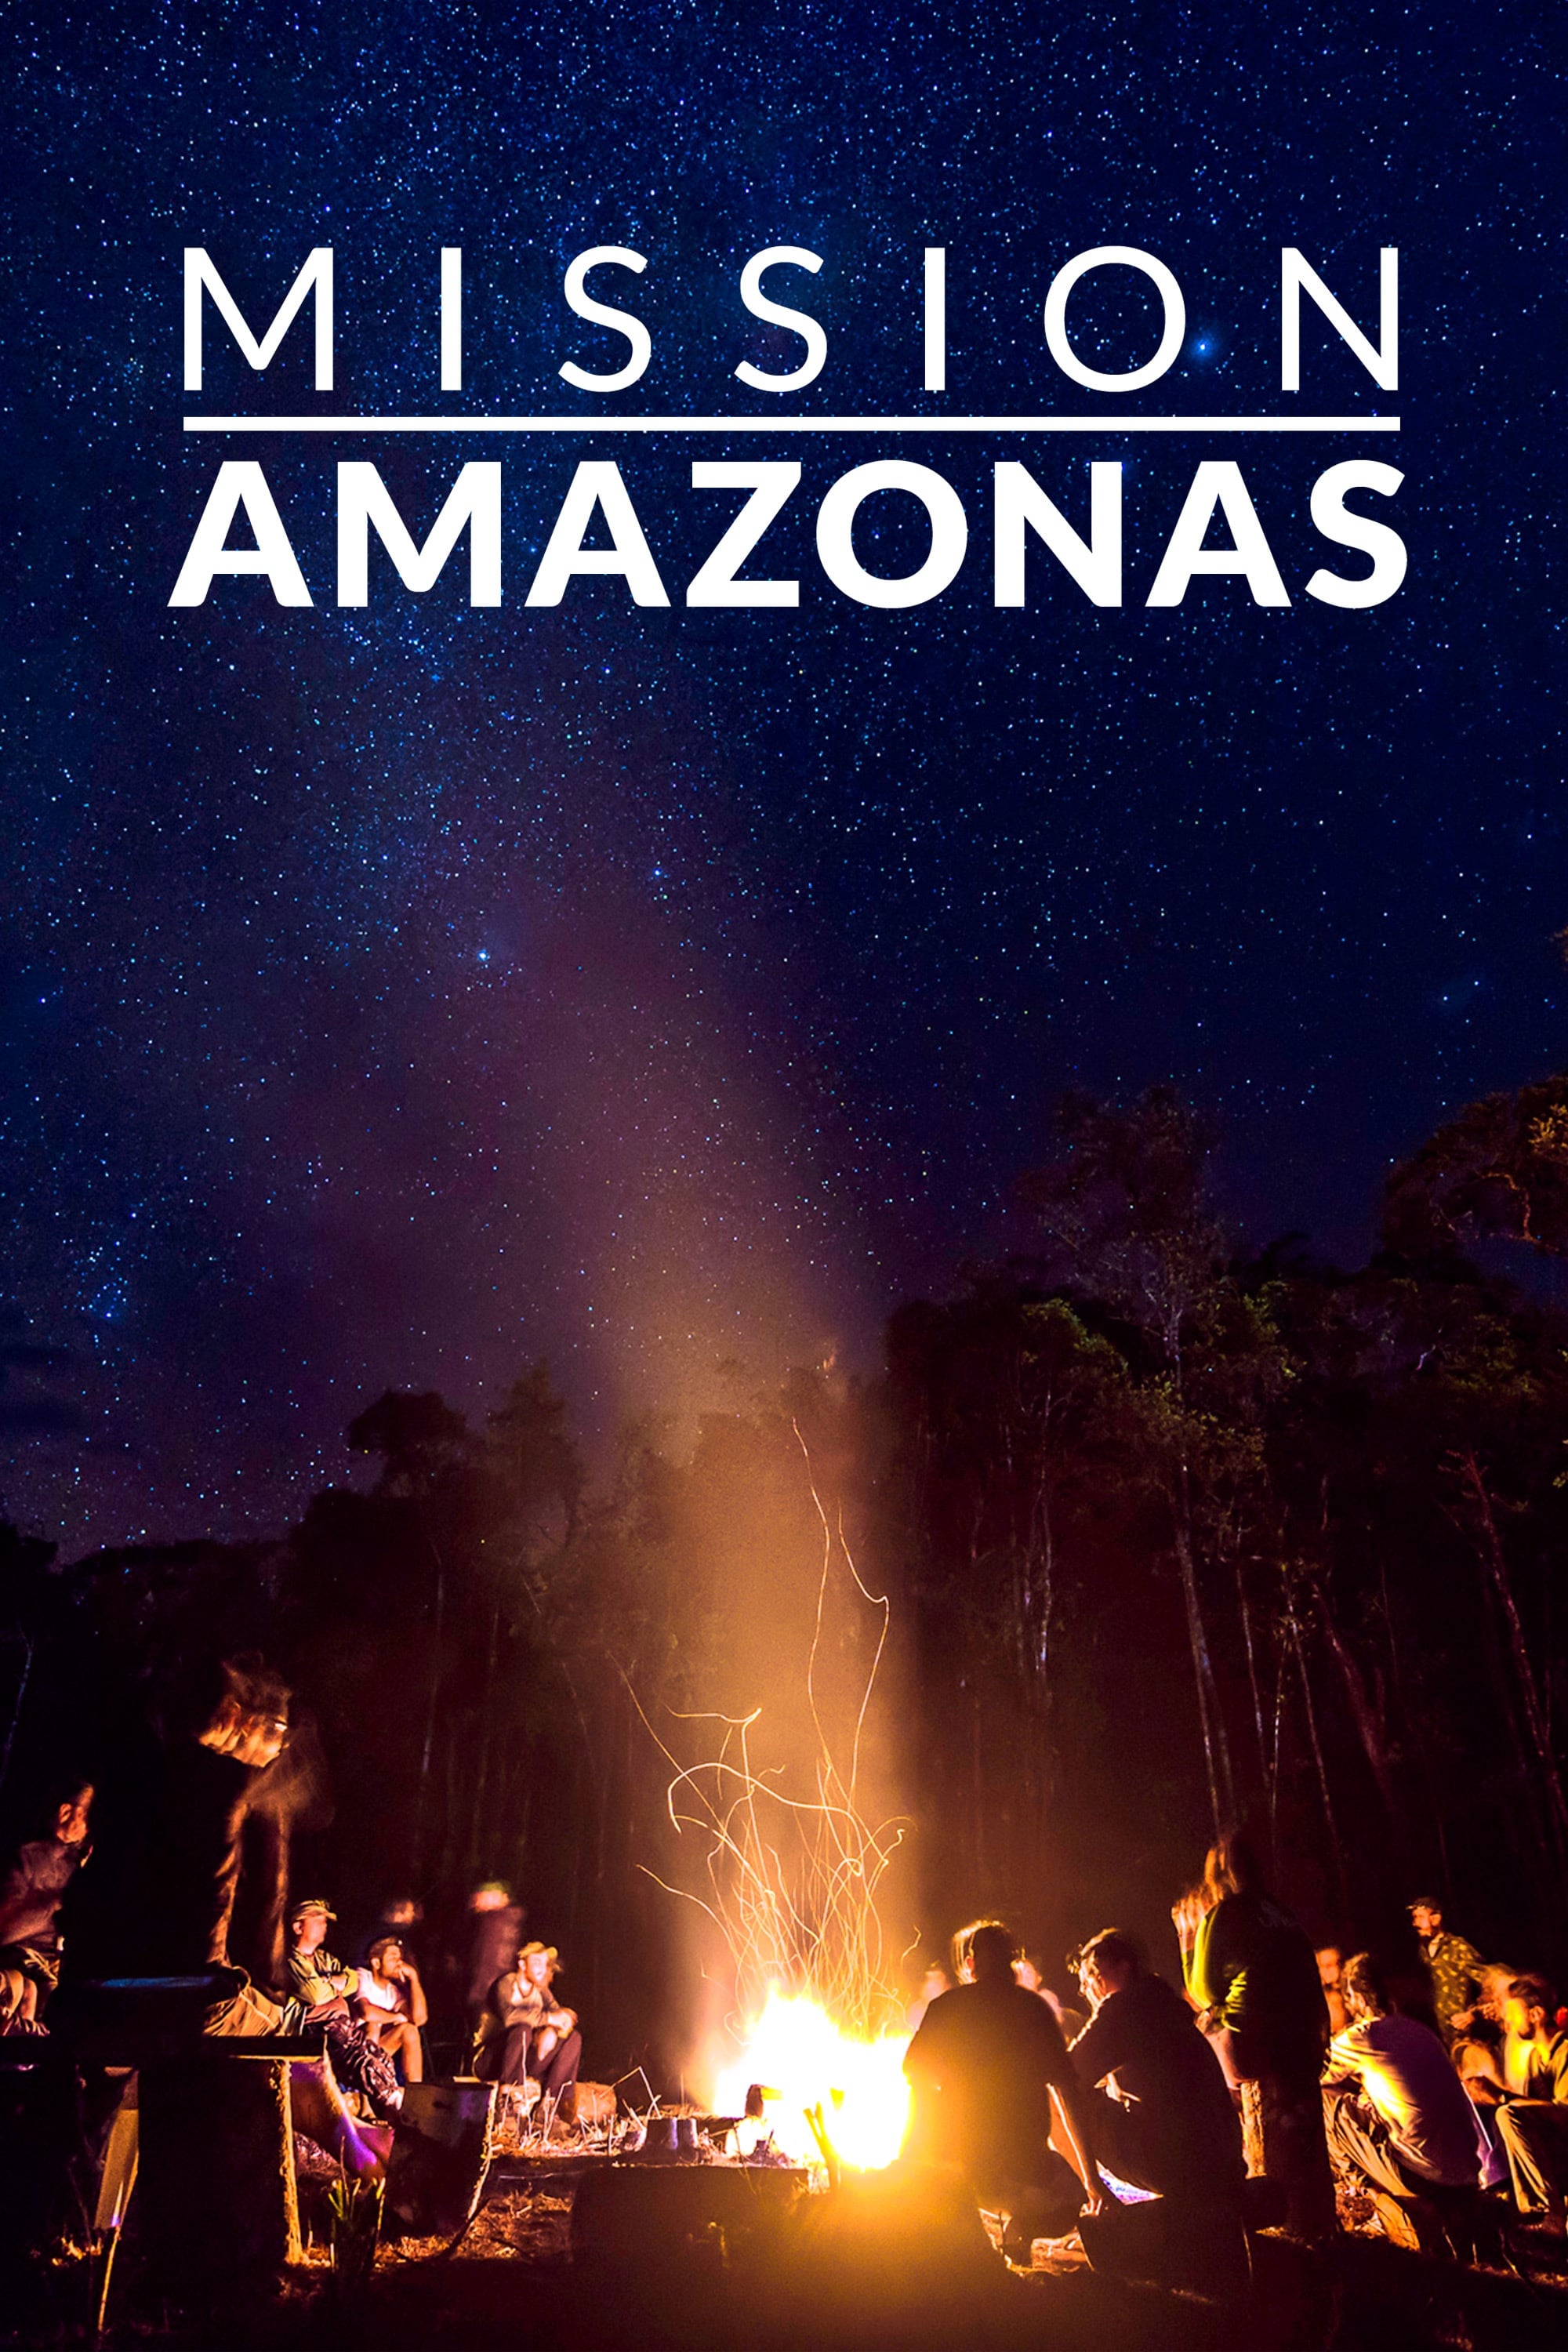 Mission Amazonas